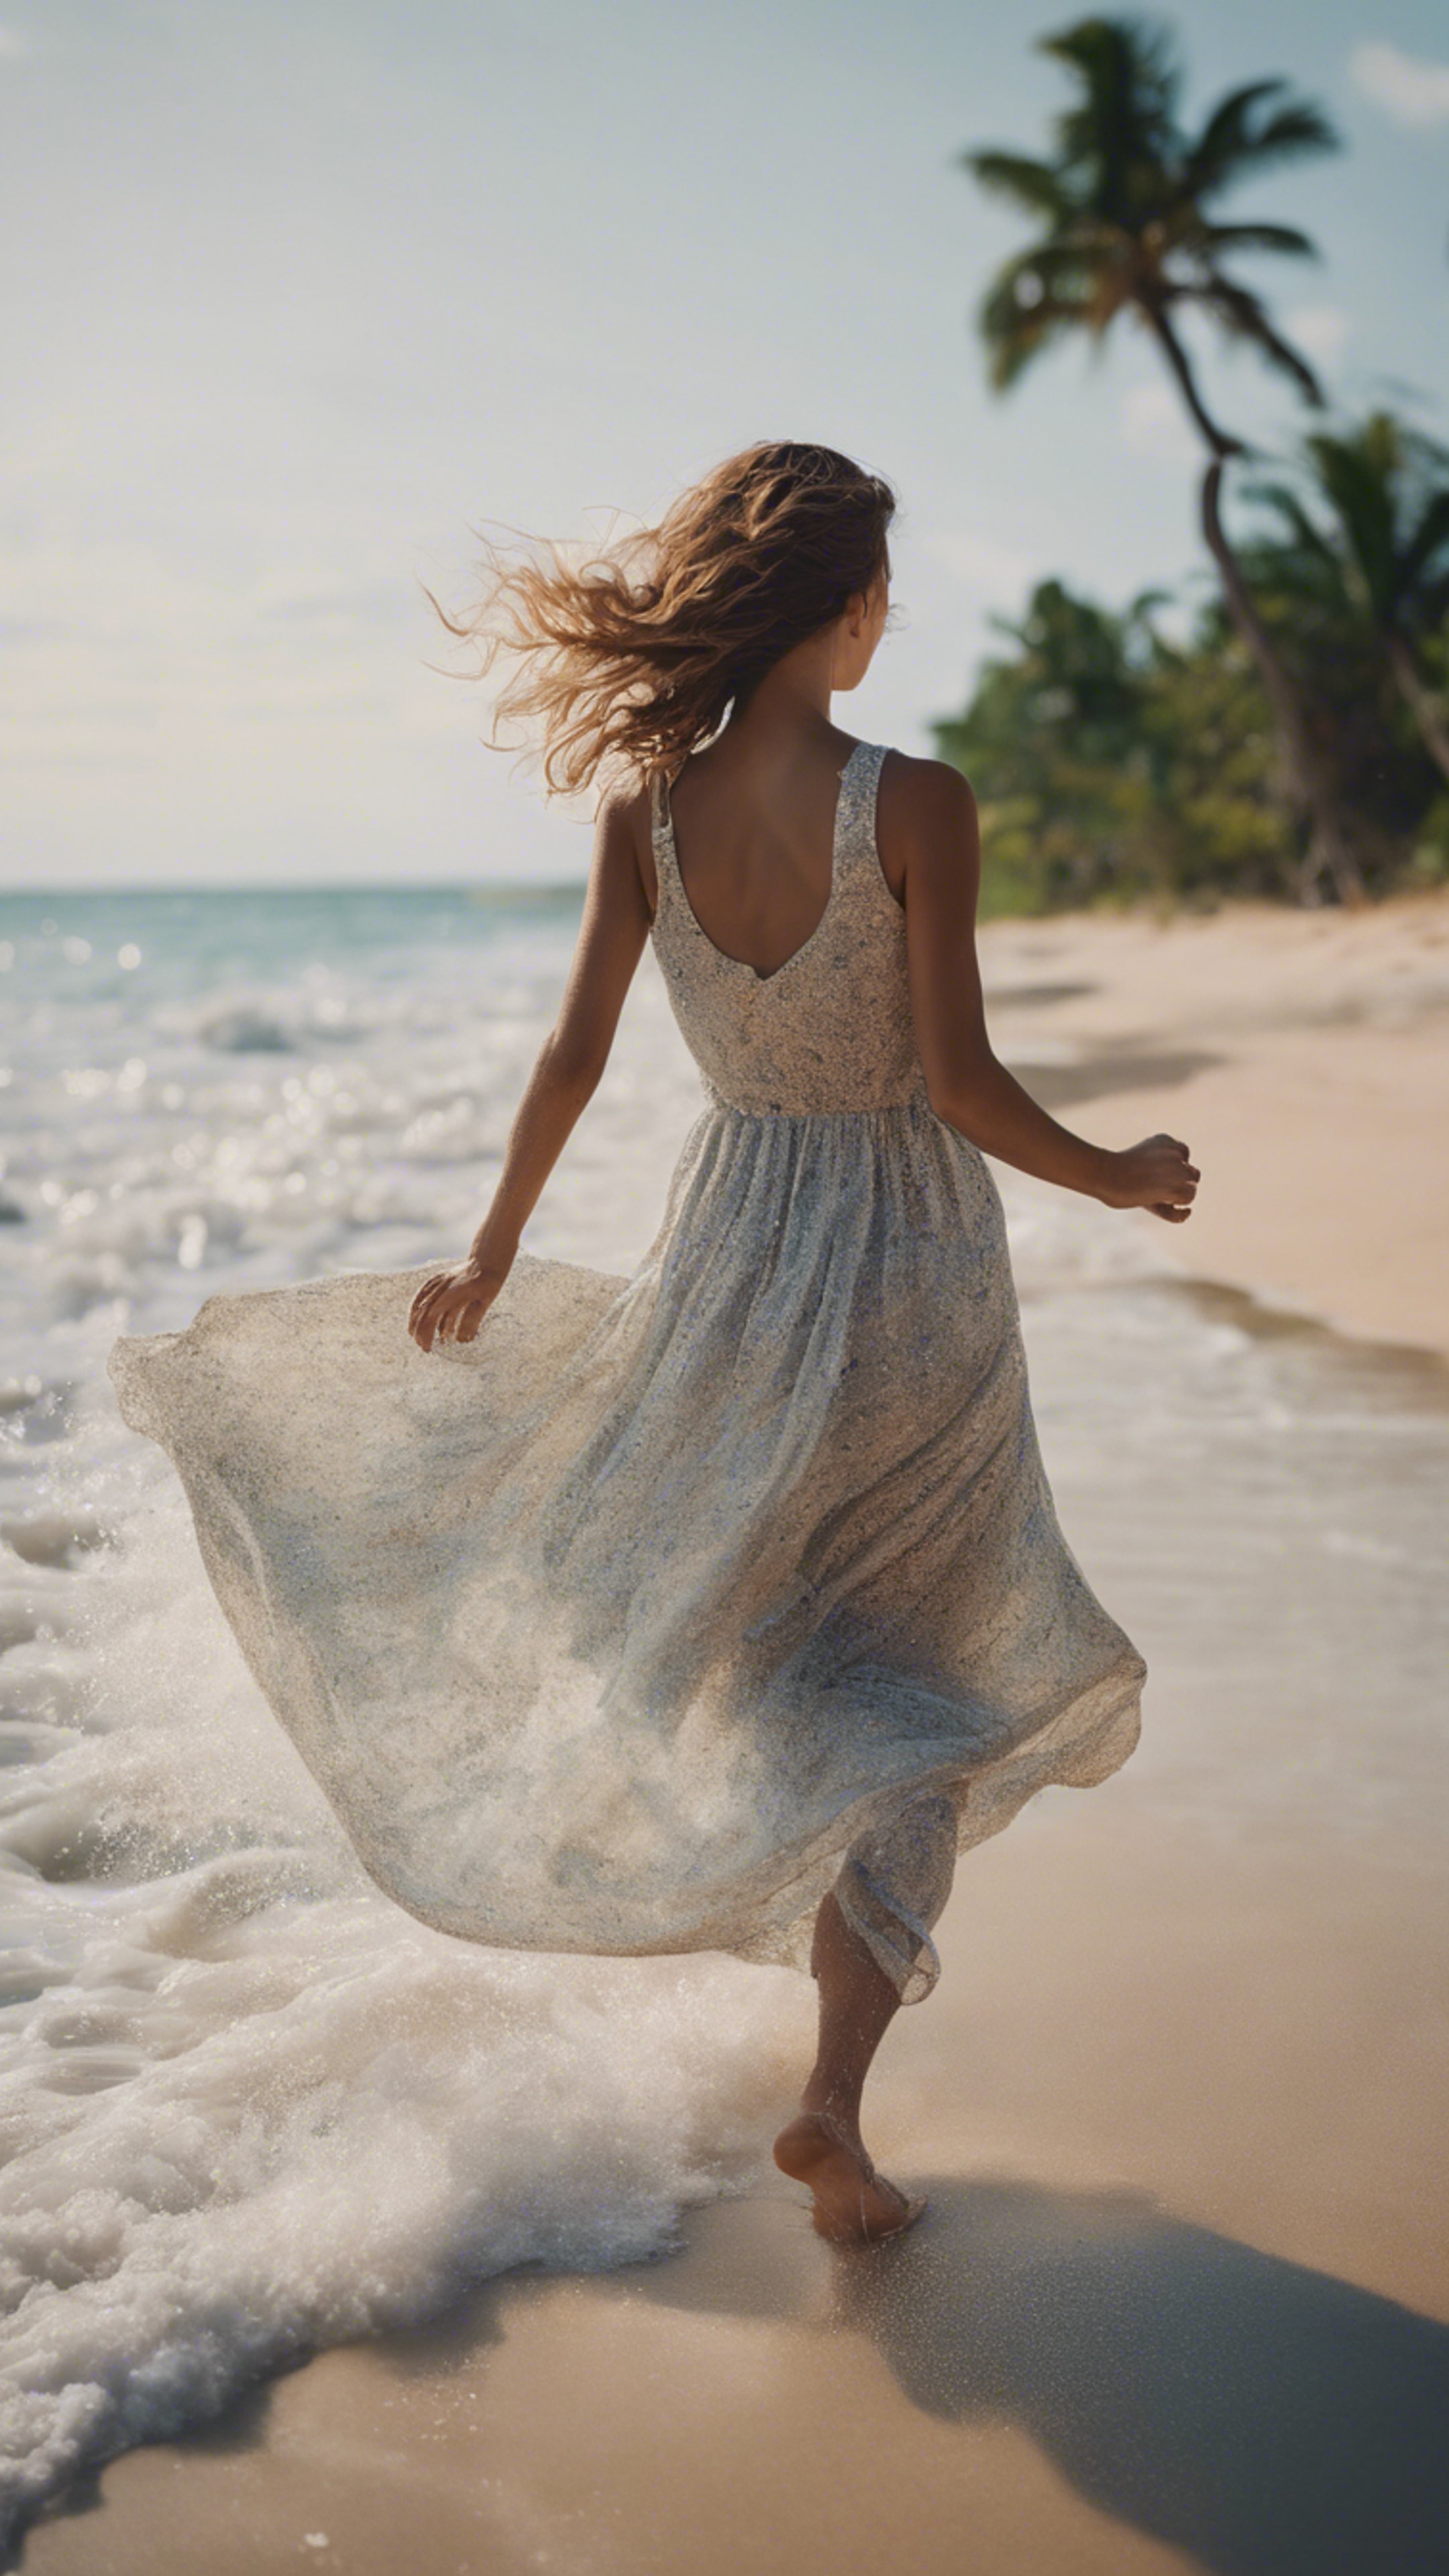 A girl in a flowy dress running alongside the sea at a tropical beach. Tapeta na zeď[6de970100921406193d7]